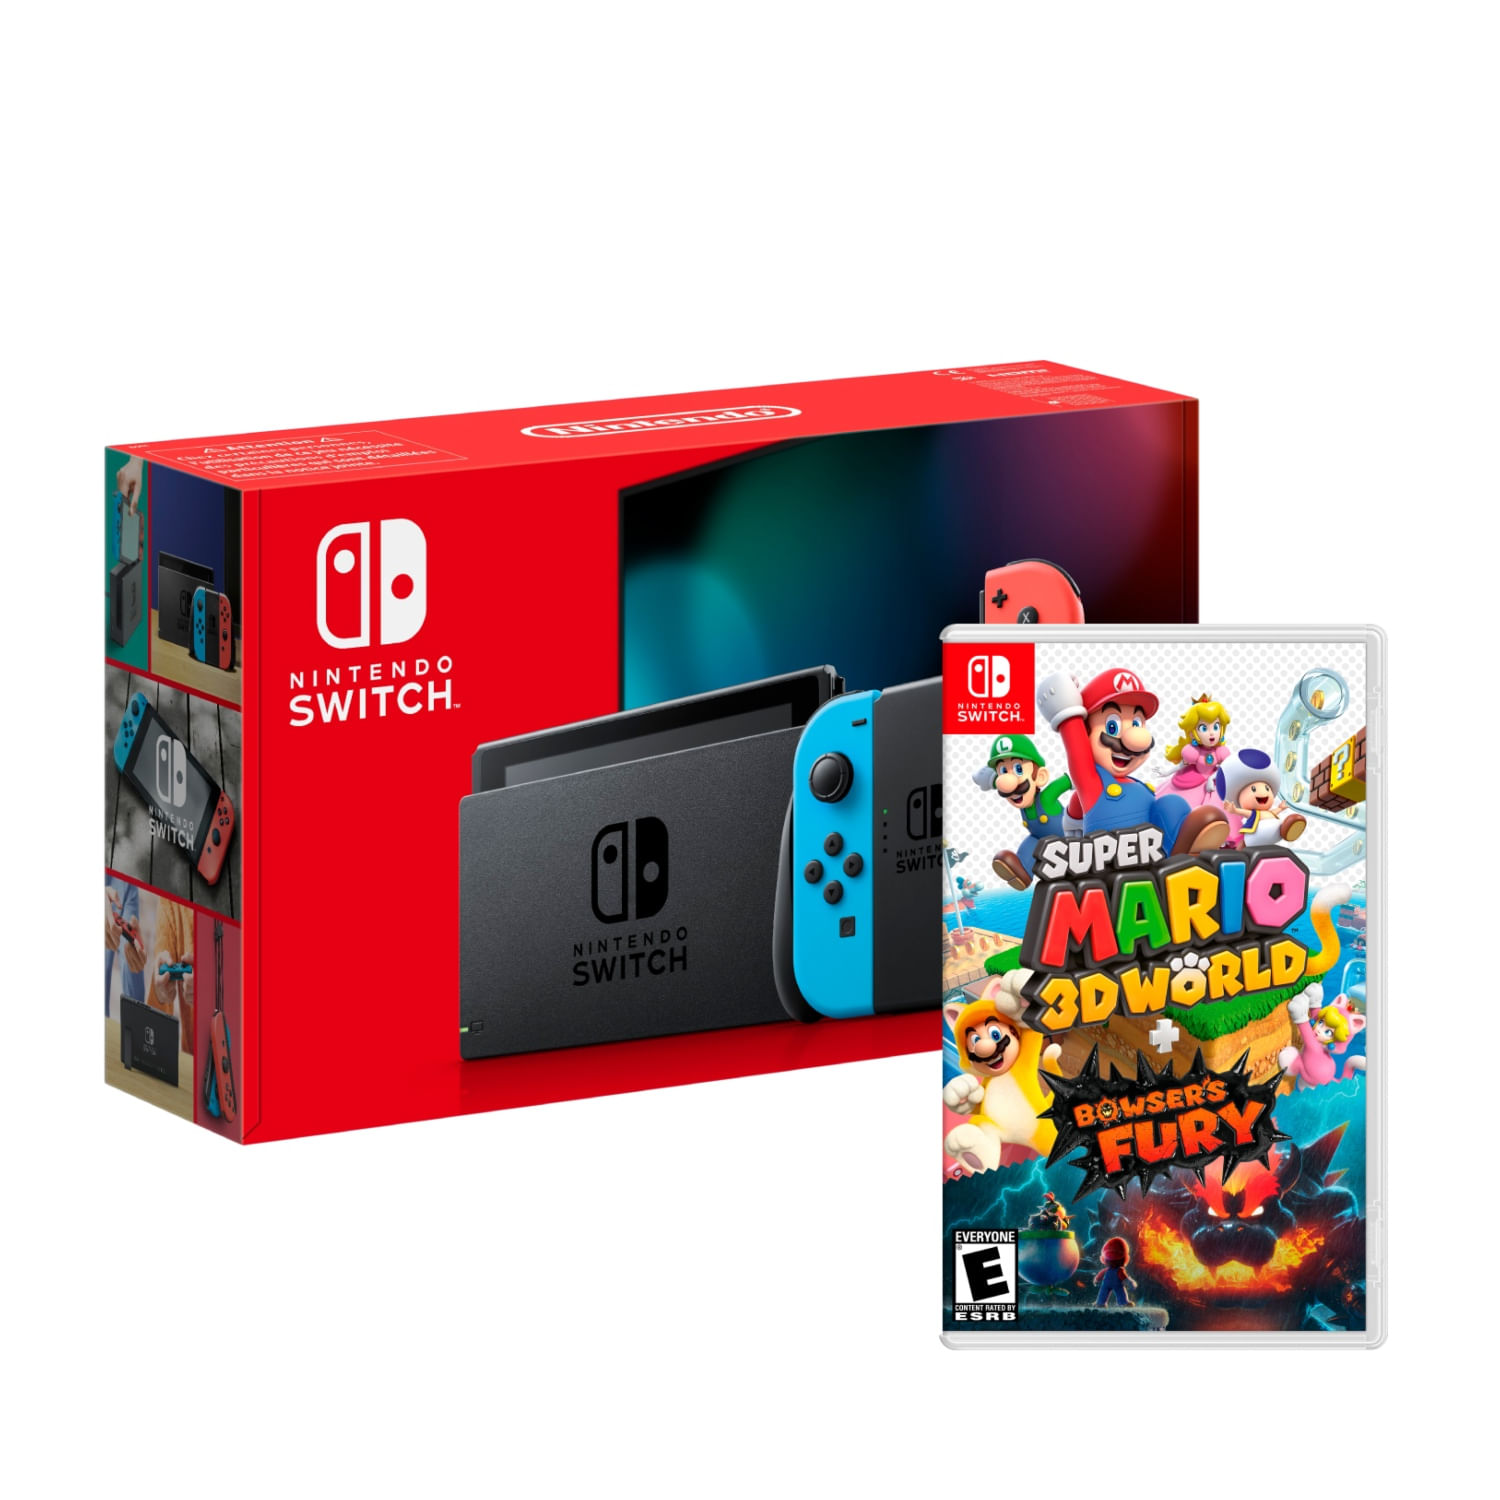 Consola Nintendo Switch 2019 Bateria Extendida + Super Mario 3D World Bowsers Fury